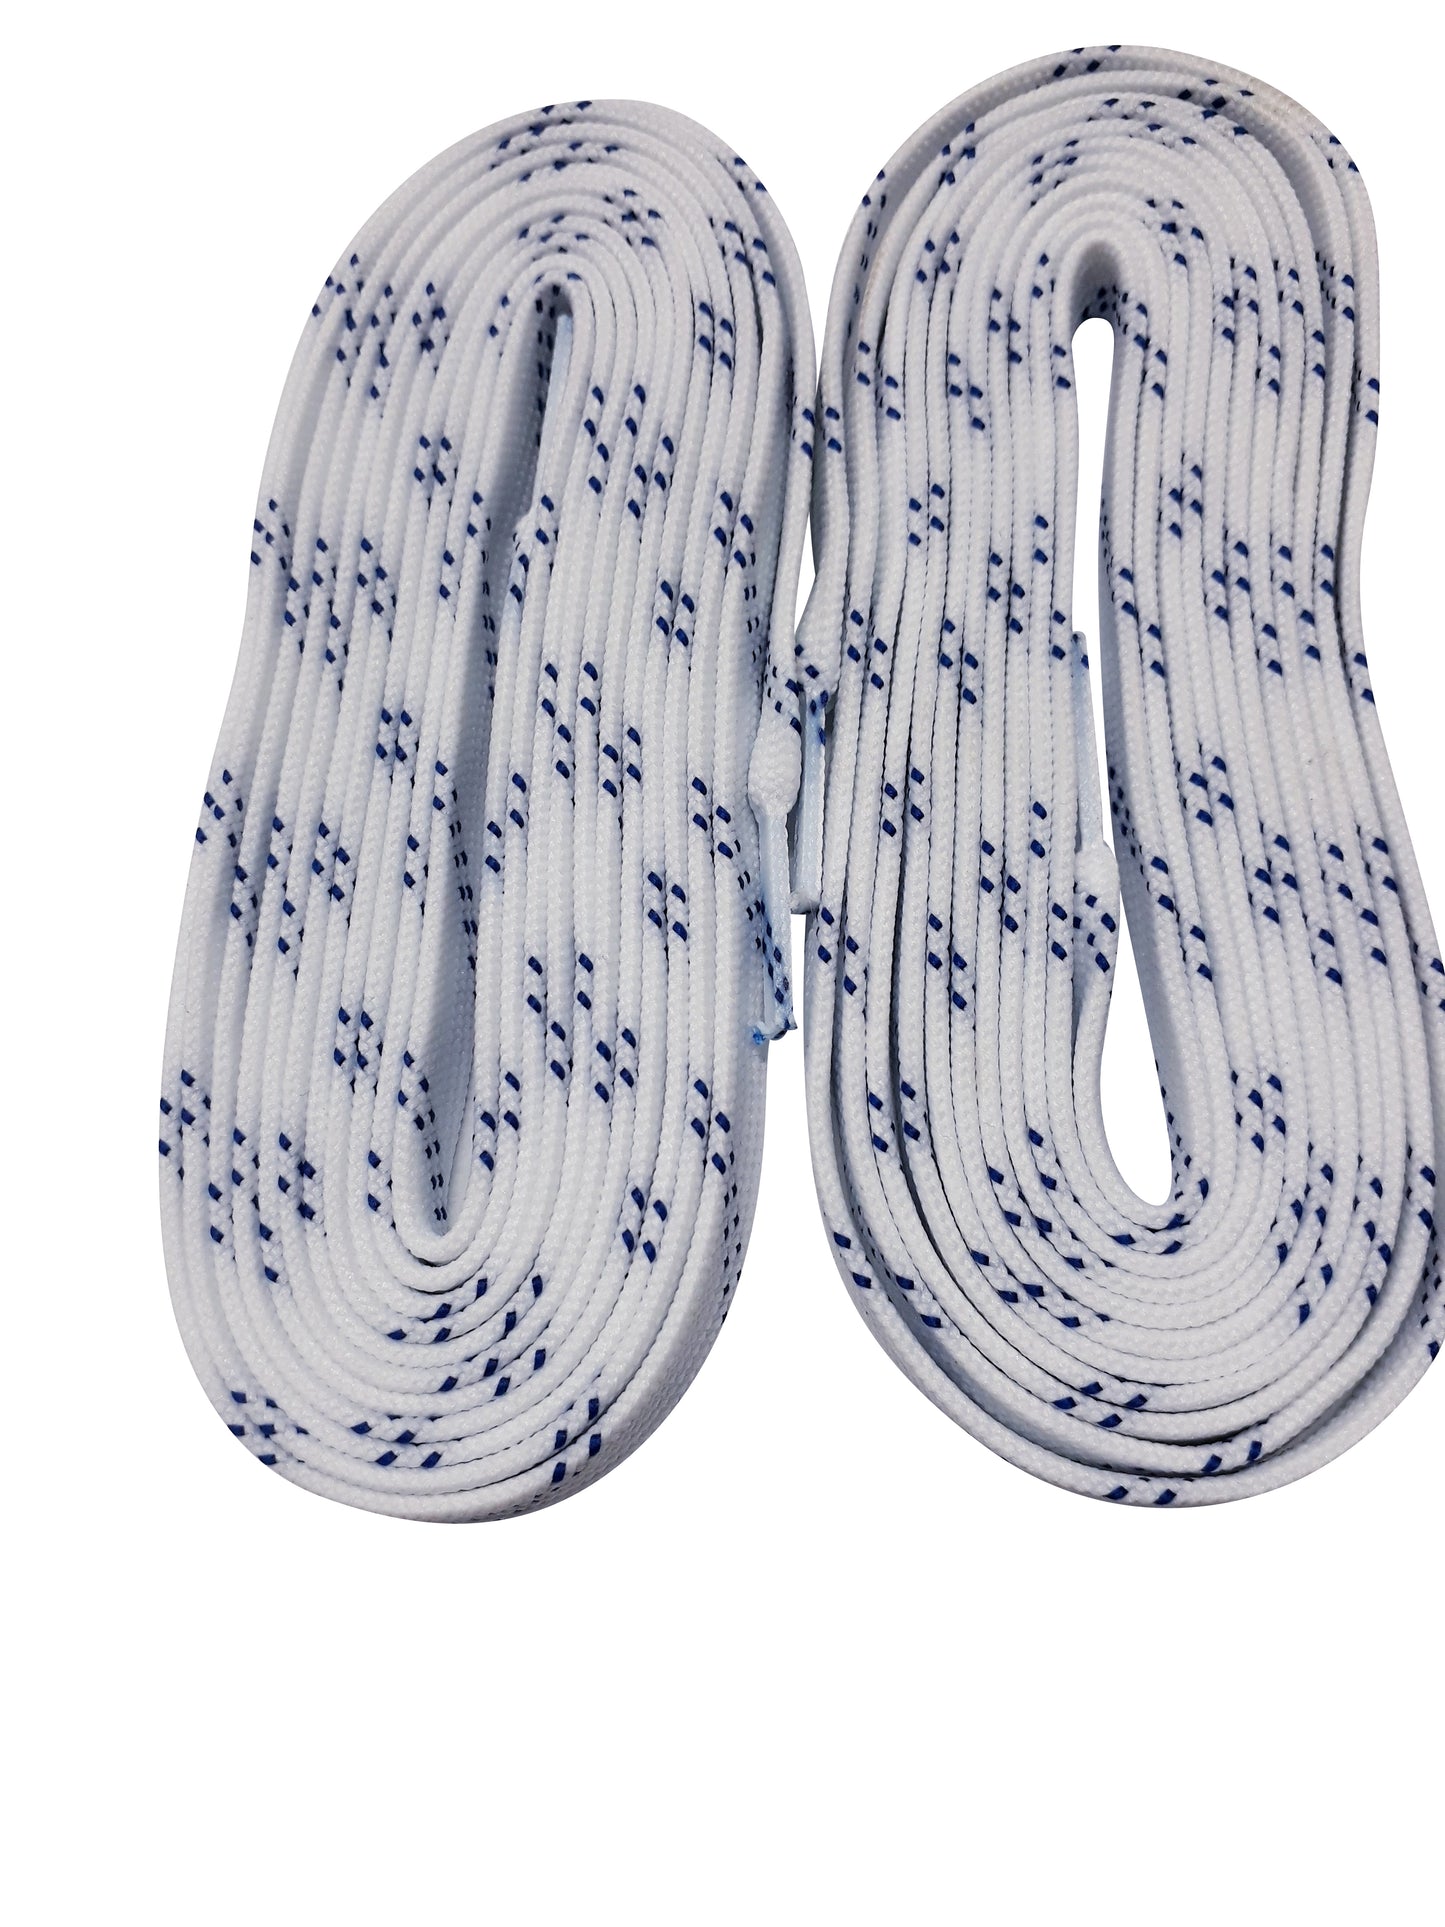 Shoelaces hockey waxed white/blue 84-130" HTX3